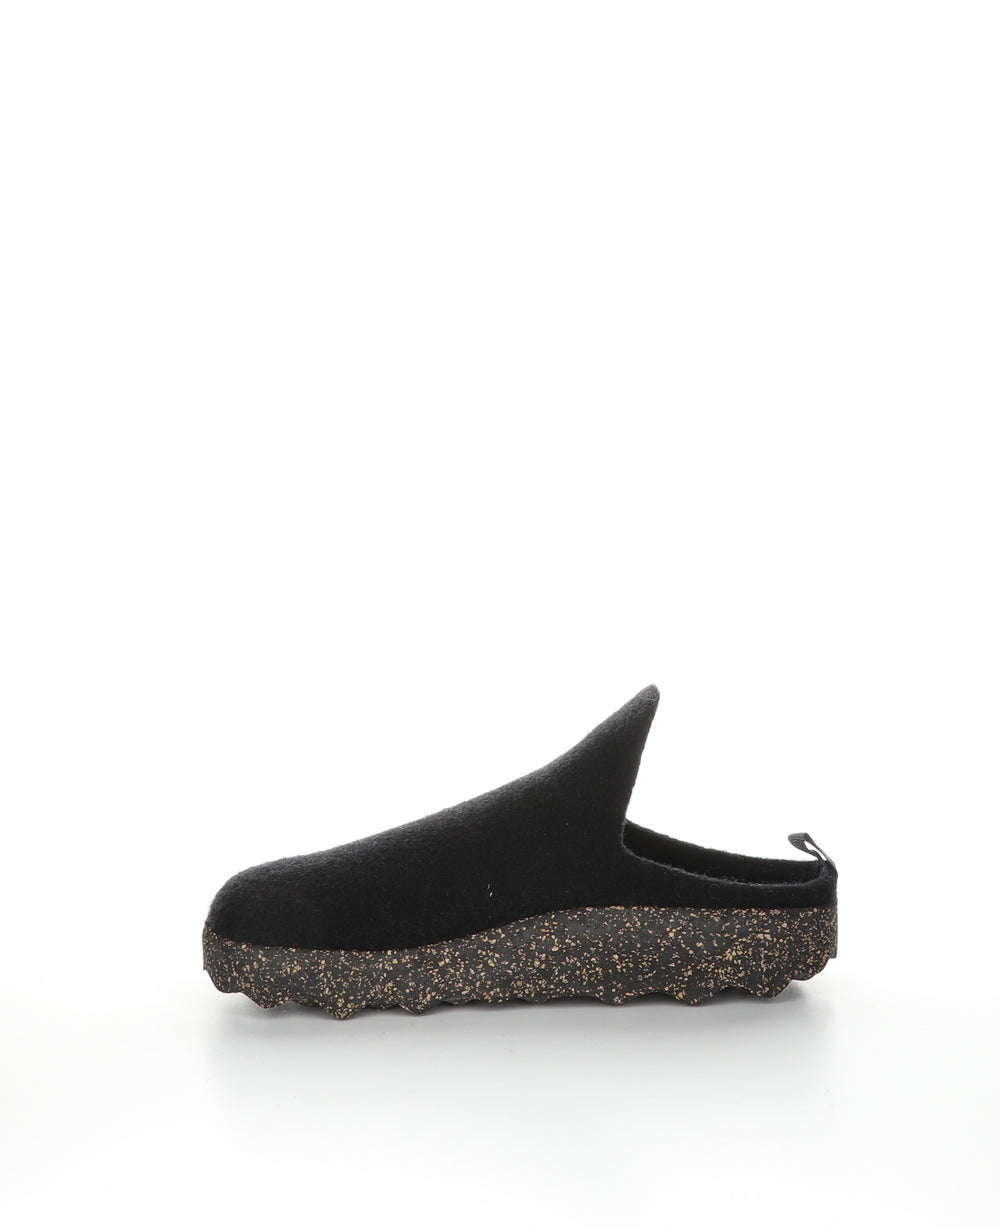 COME023ASP Black Round Toe Shoes|COME023ASP Chaussures à Bout Rond in Noir